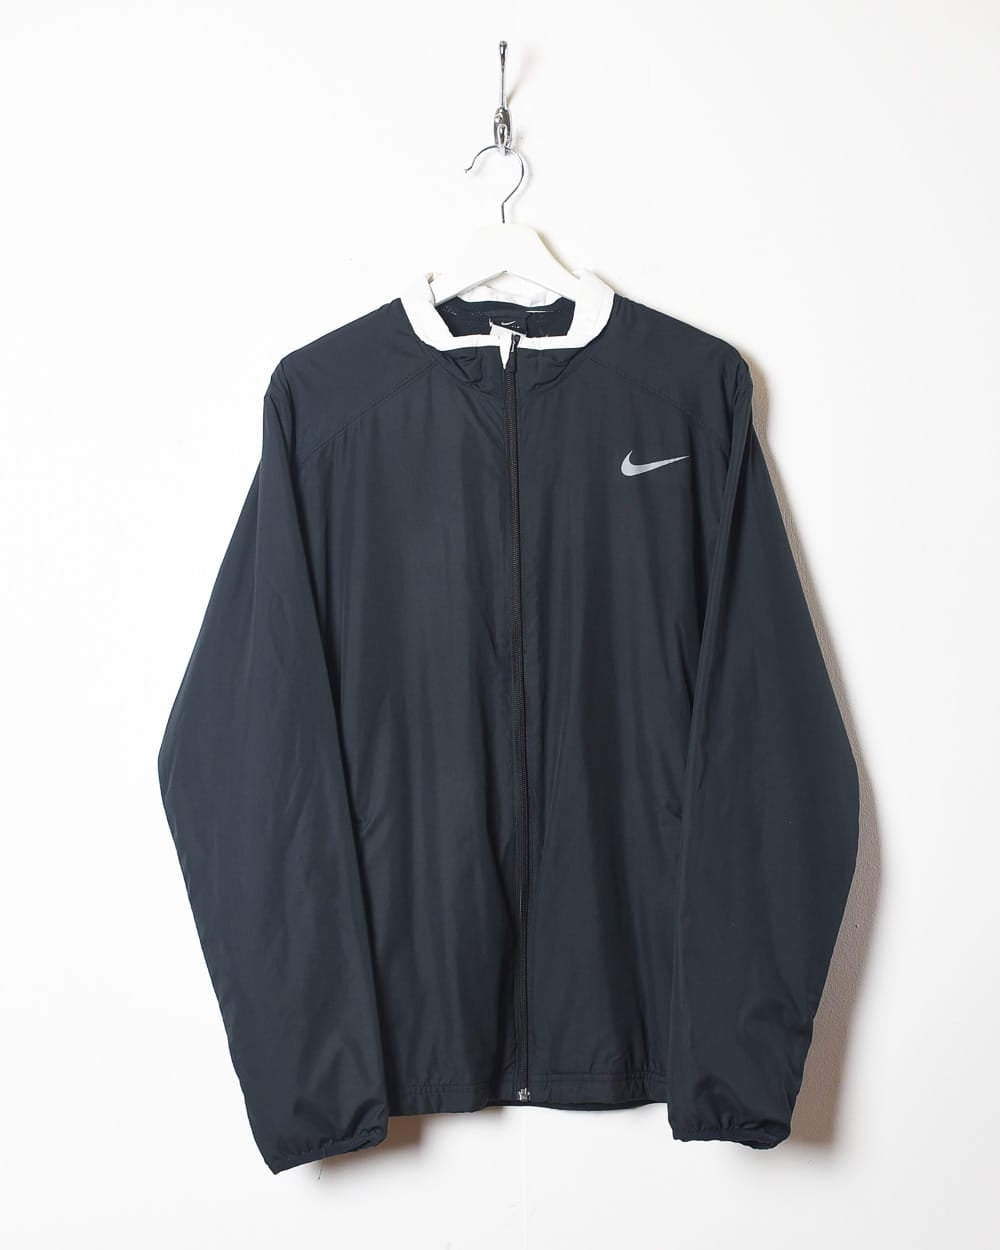 Black Nike Dri-Fit Windbreaker Jacket - Large